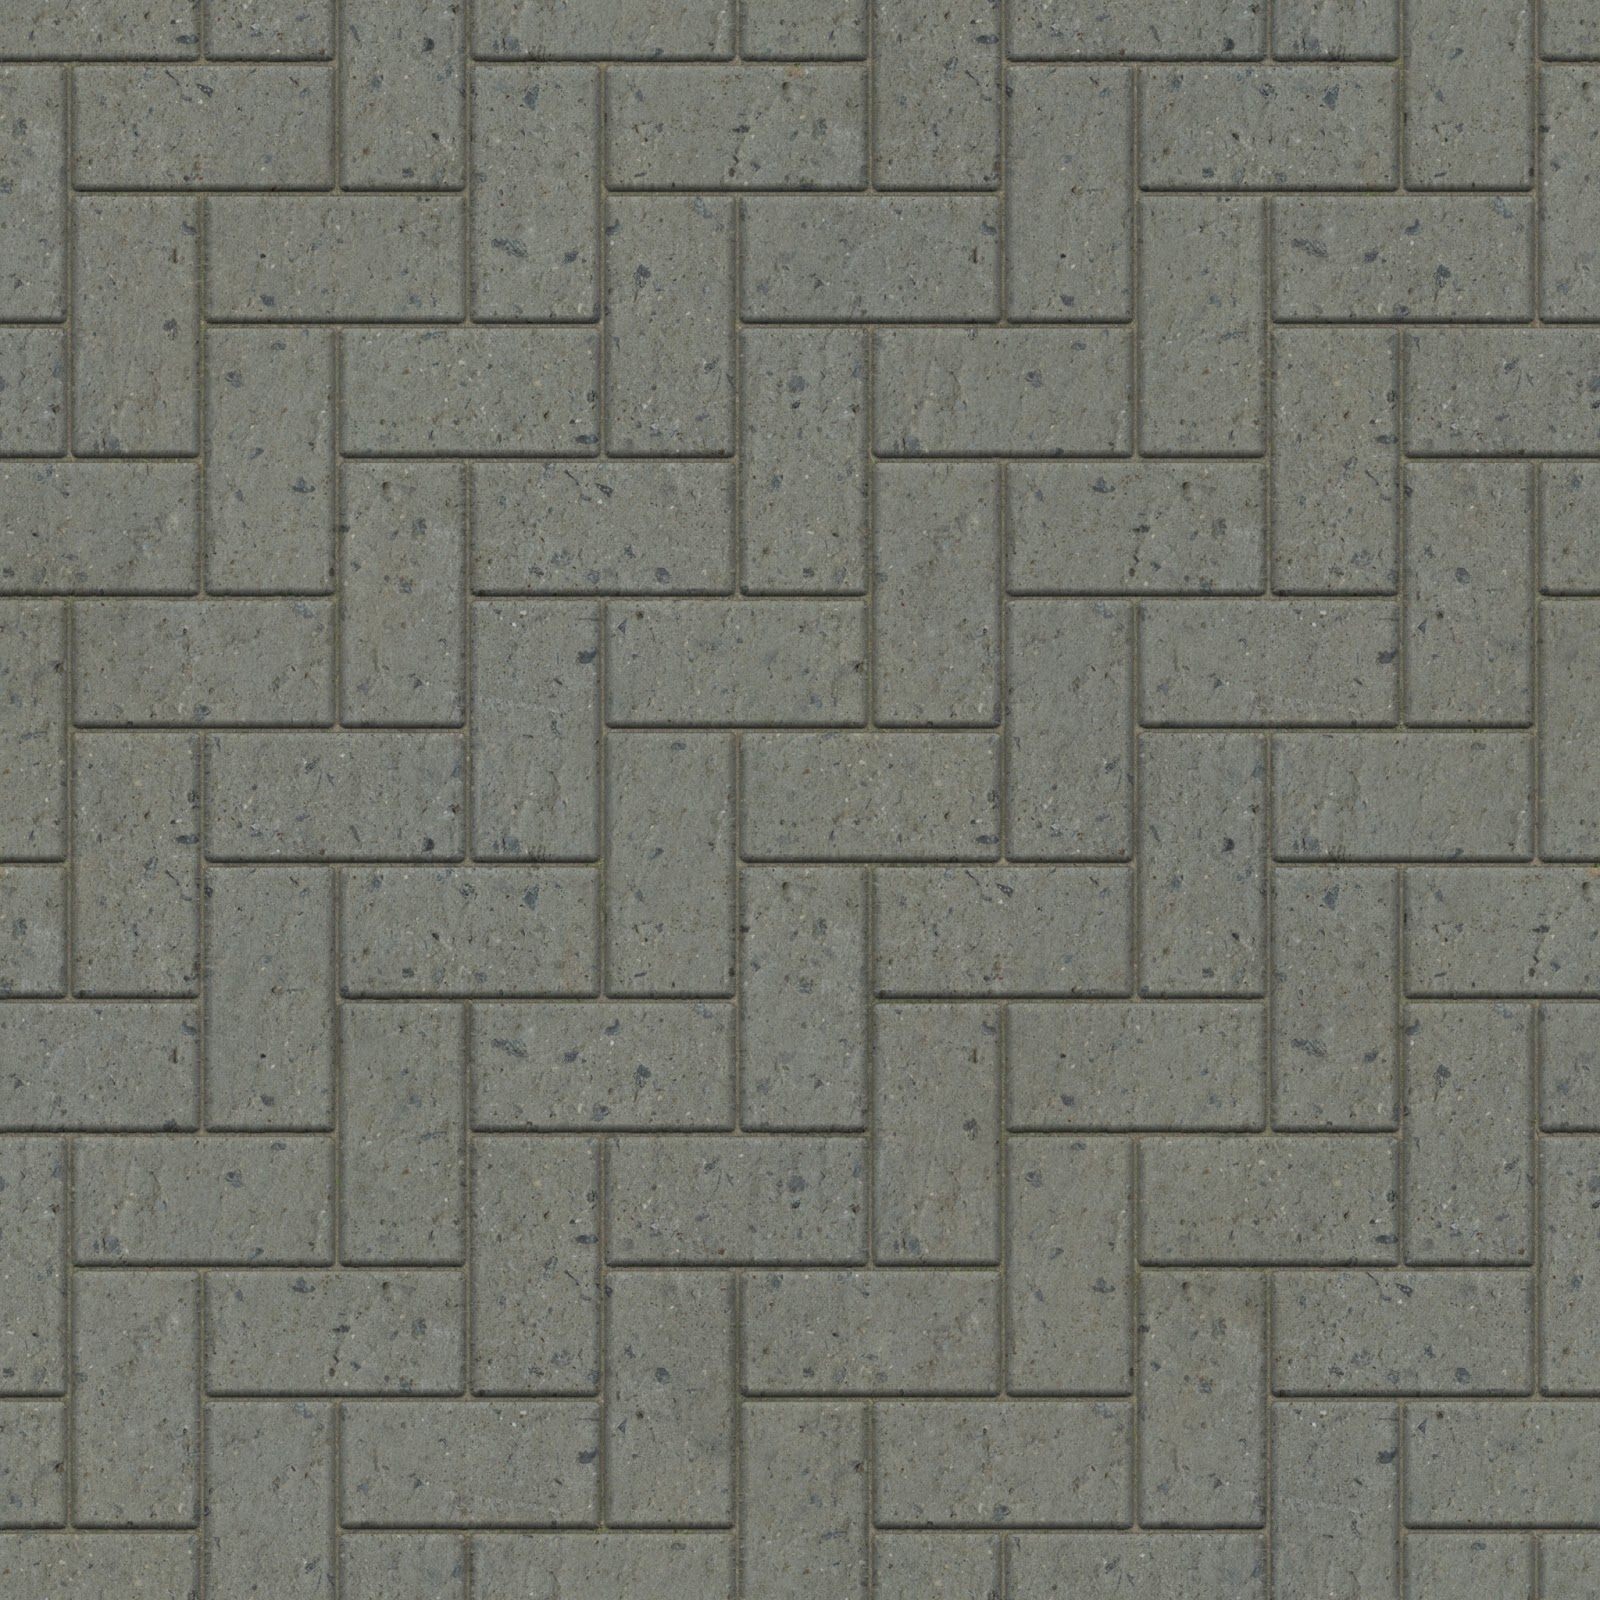 High Resolution Seamless Textures: Brick tiles pavement seamless